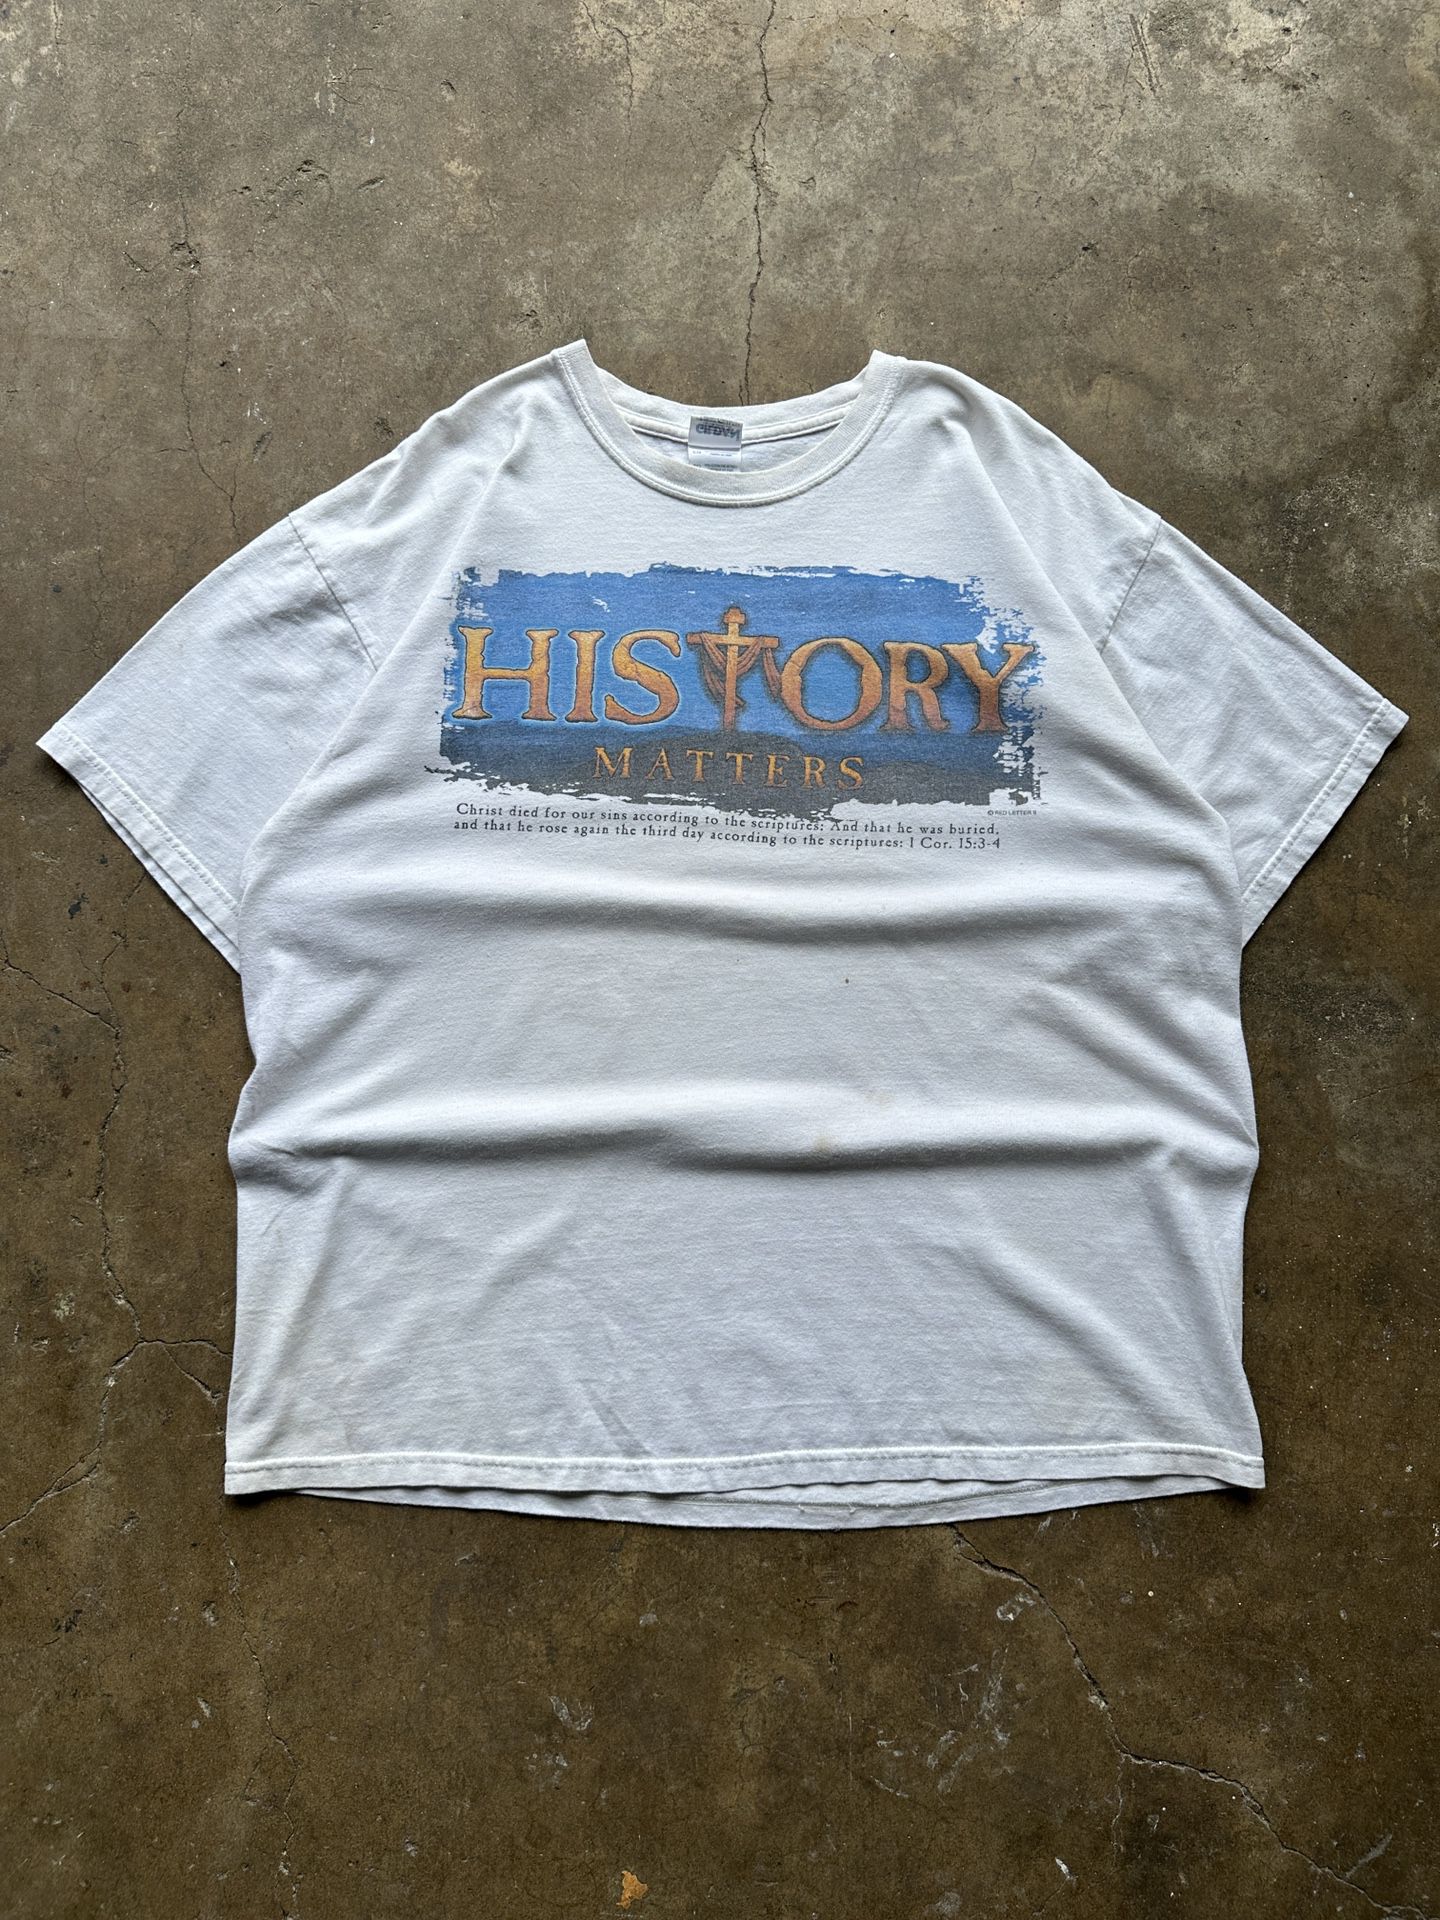 (XL) Vintage 90s History Matters Jesus Christ Religious Tshirt